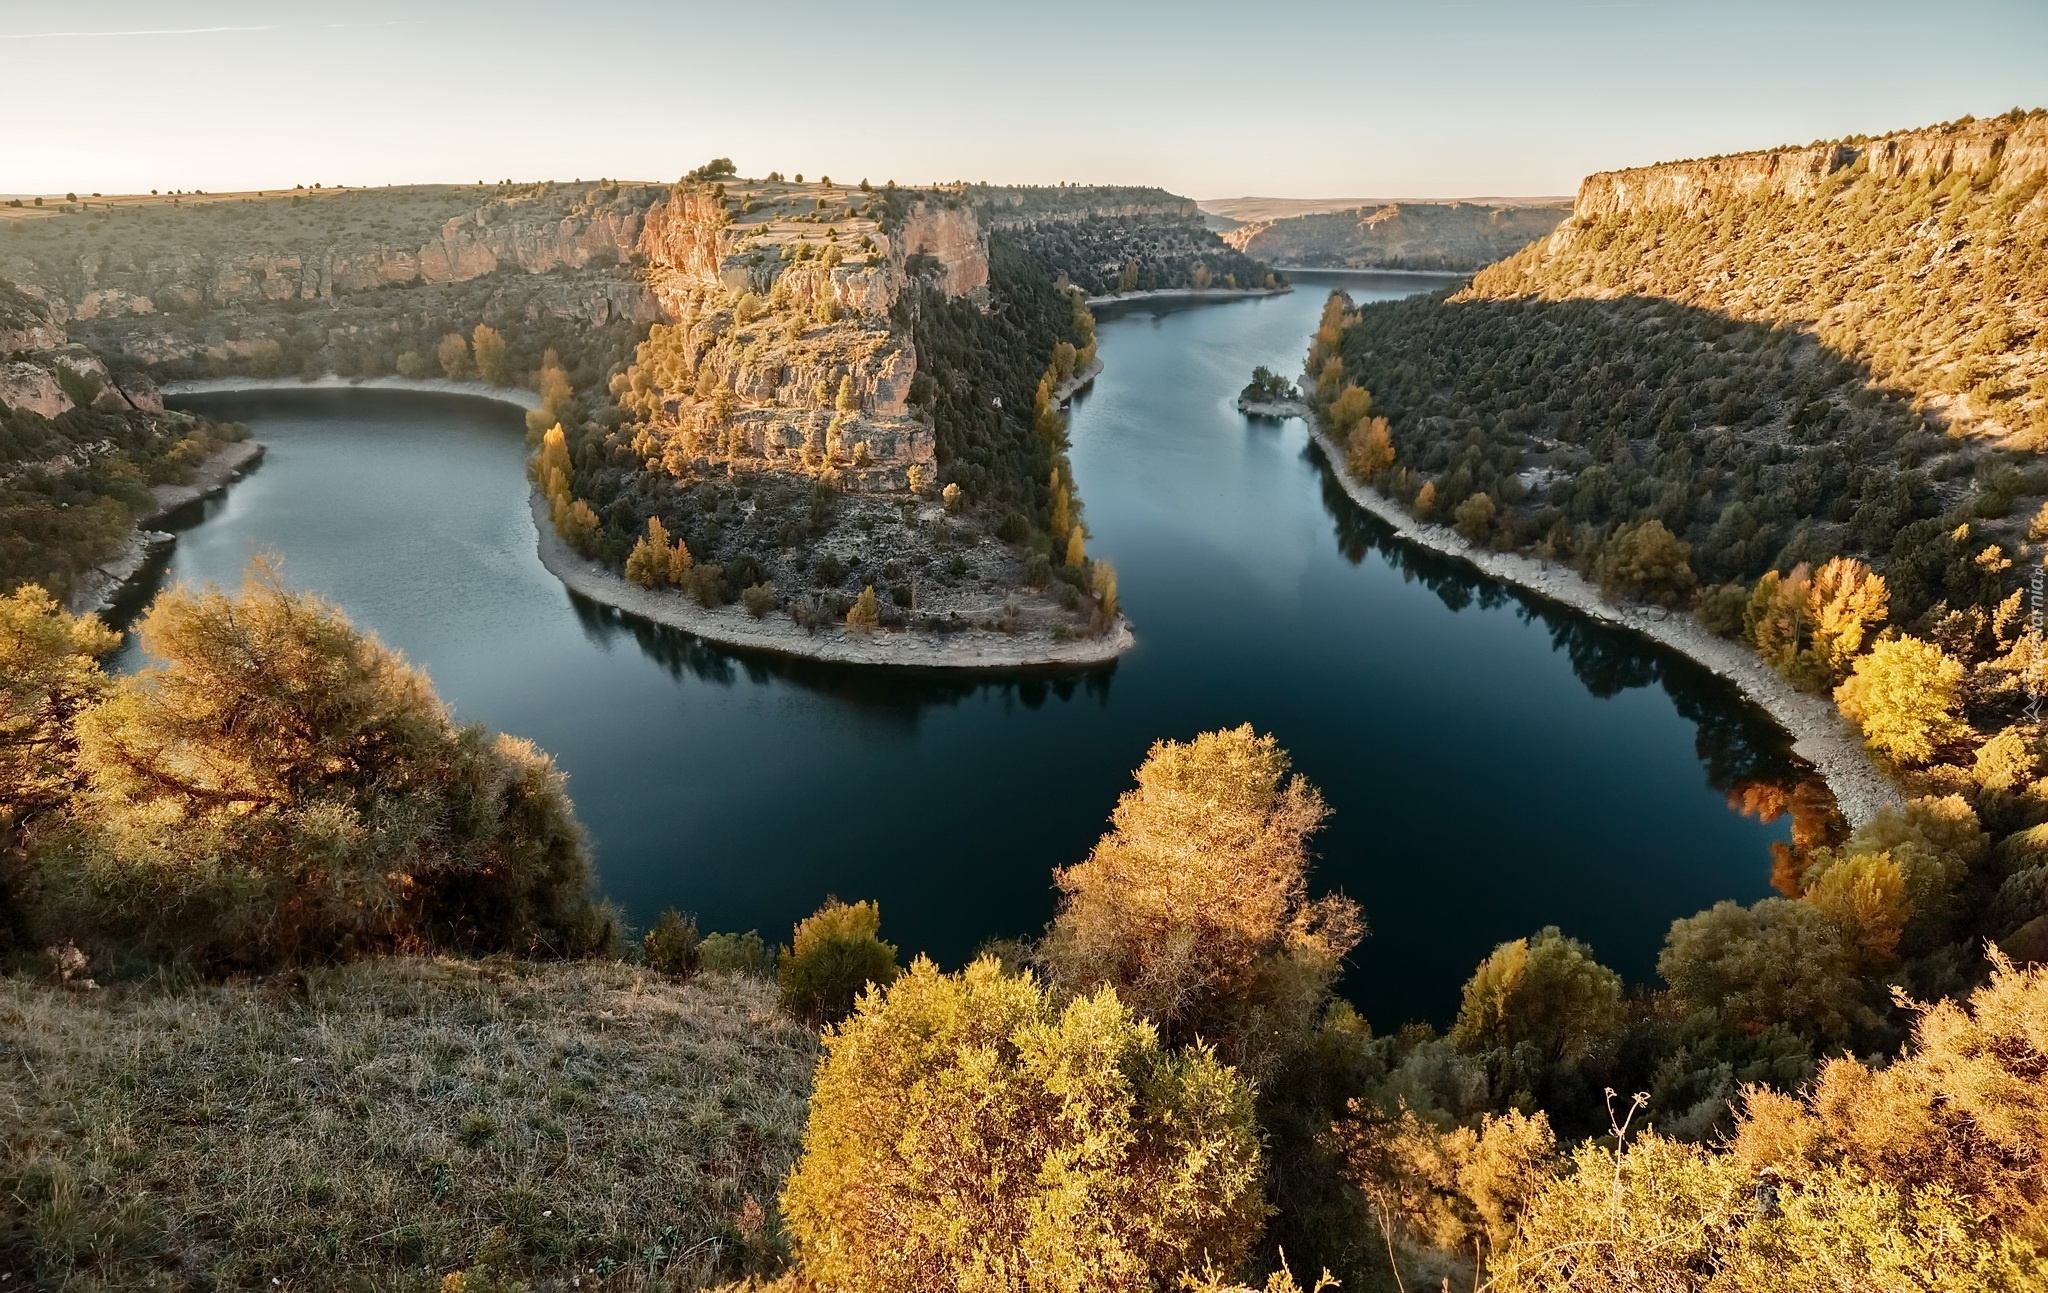 Hiszpania, Prowincja Segovia, Park krajobrazowy Hoces del Río Duratón - Parque Natural Hoces del Rio Duratón, Rzeka Duratón,  Skały, Drzewa, Roślinność